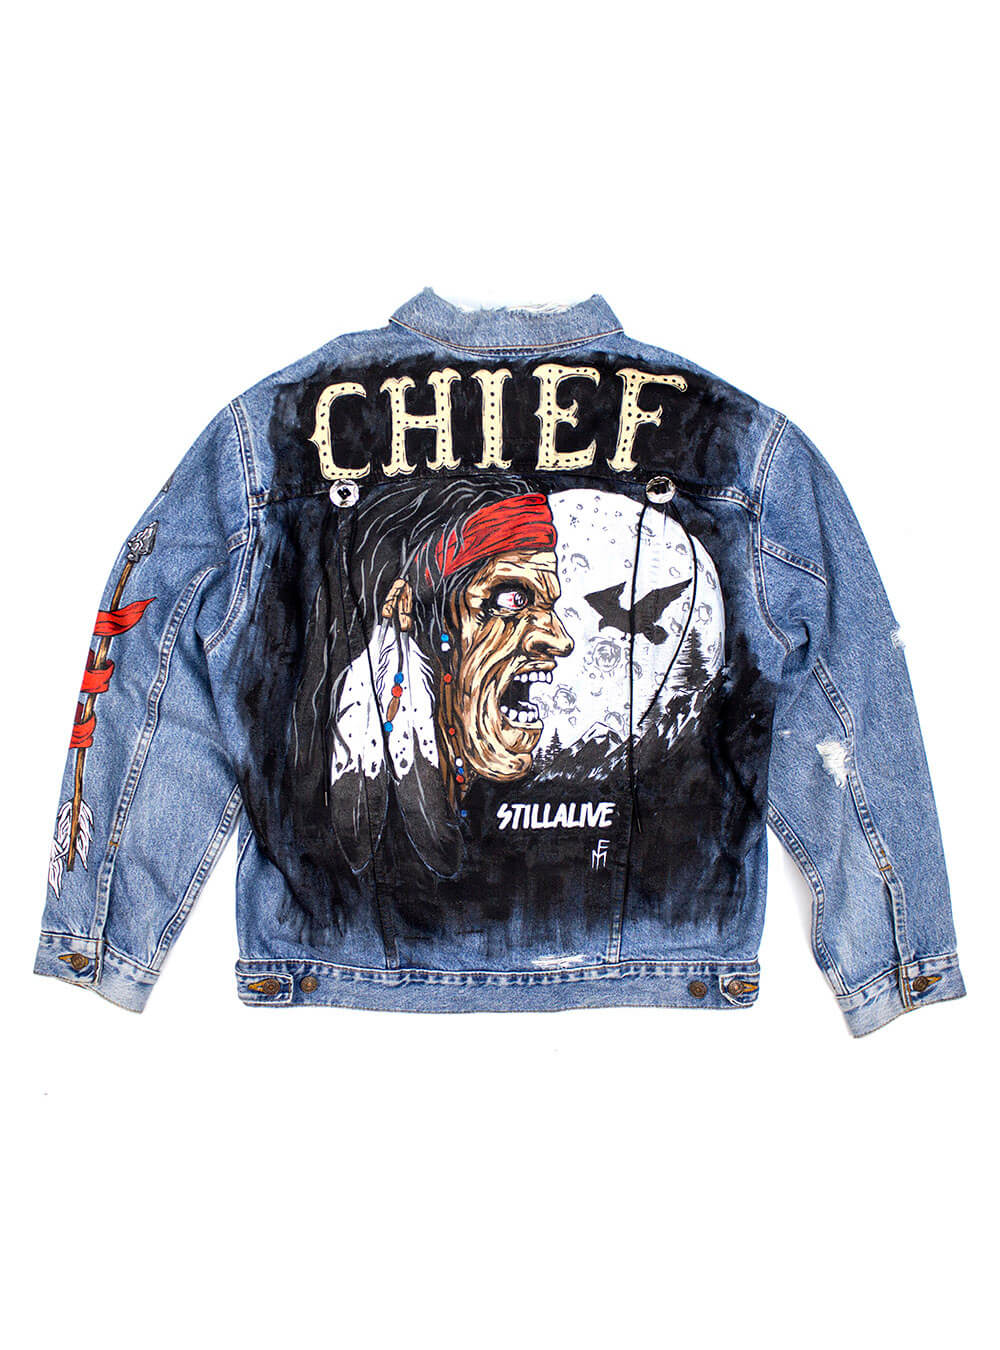 CHIEF Custom jacket